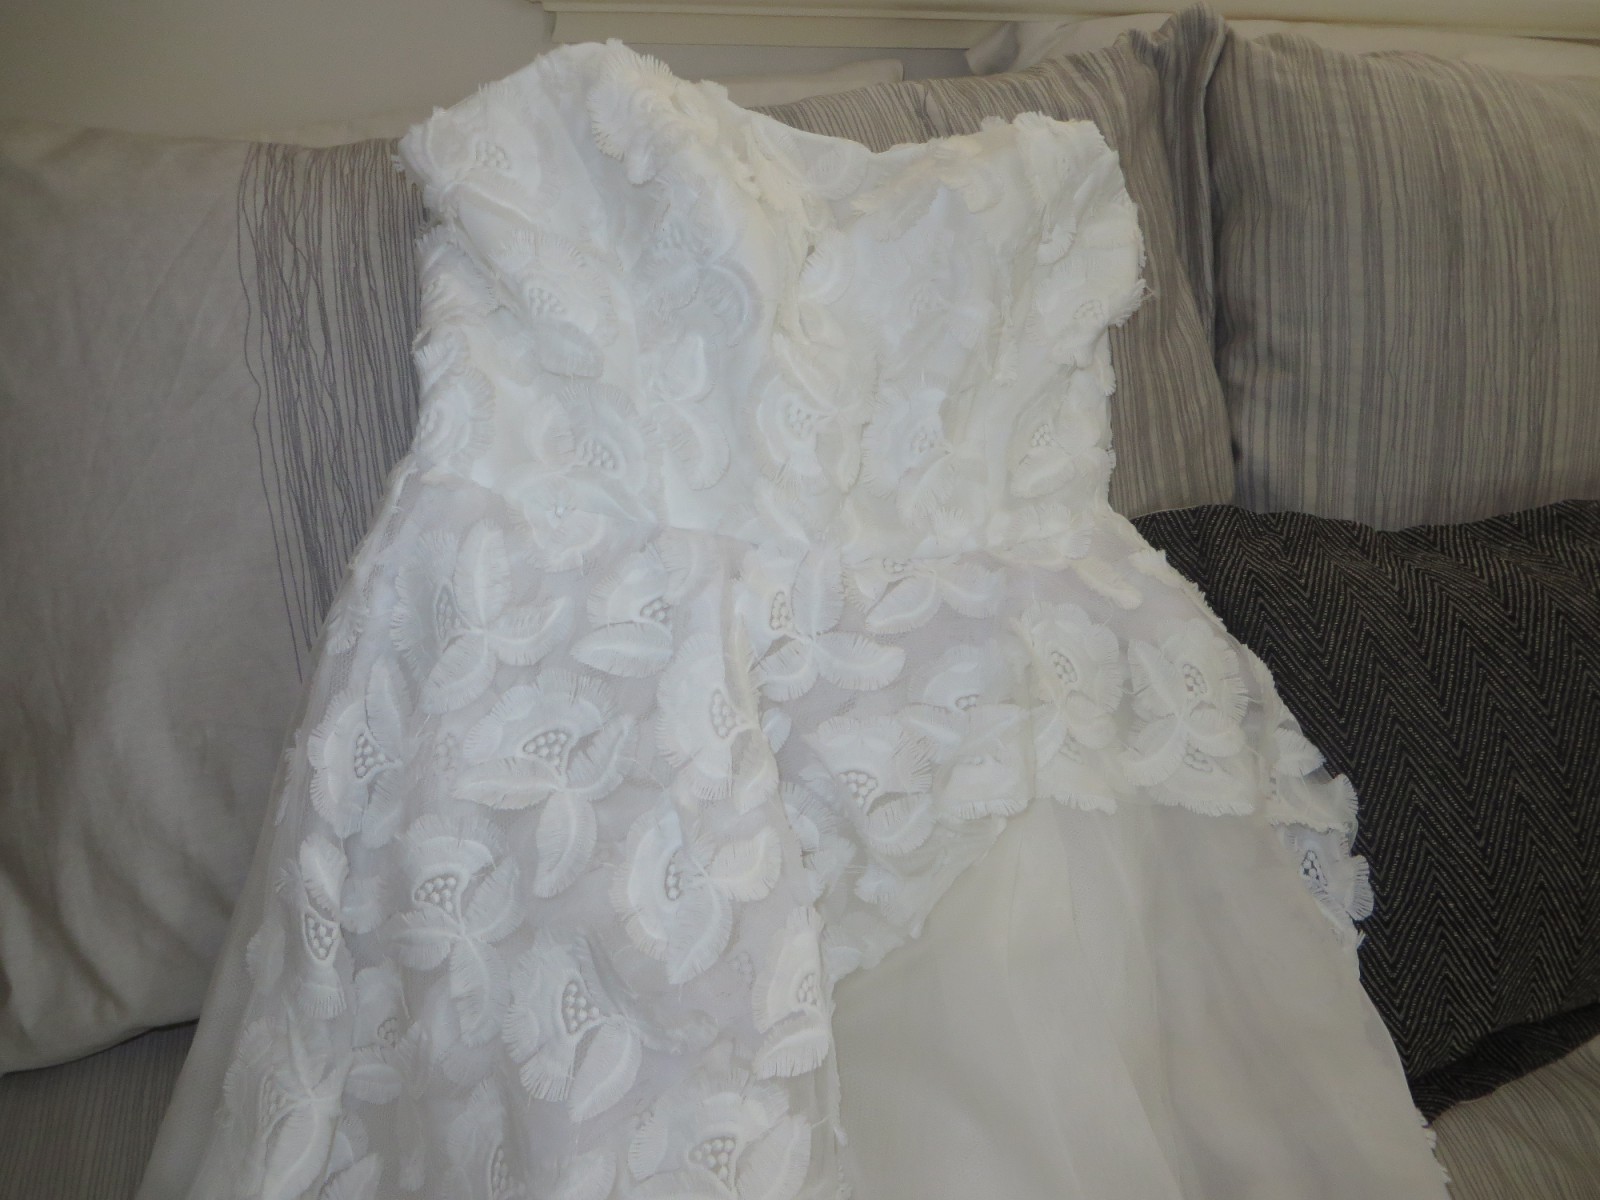 Carla Zampatti Second Hand Wedding Dress Save 57% - Stillwhite